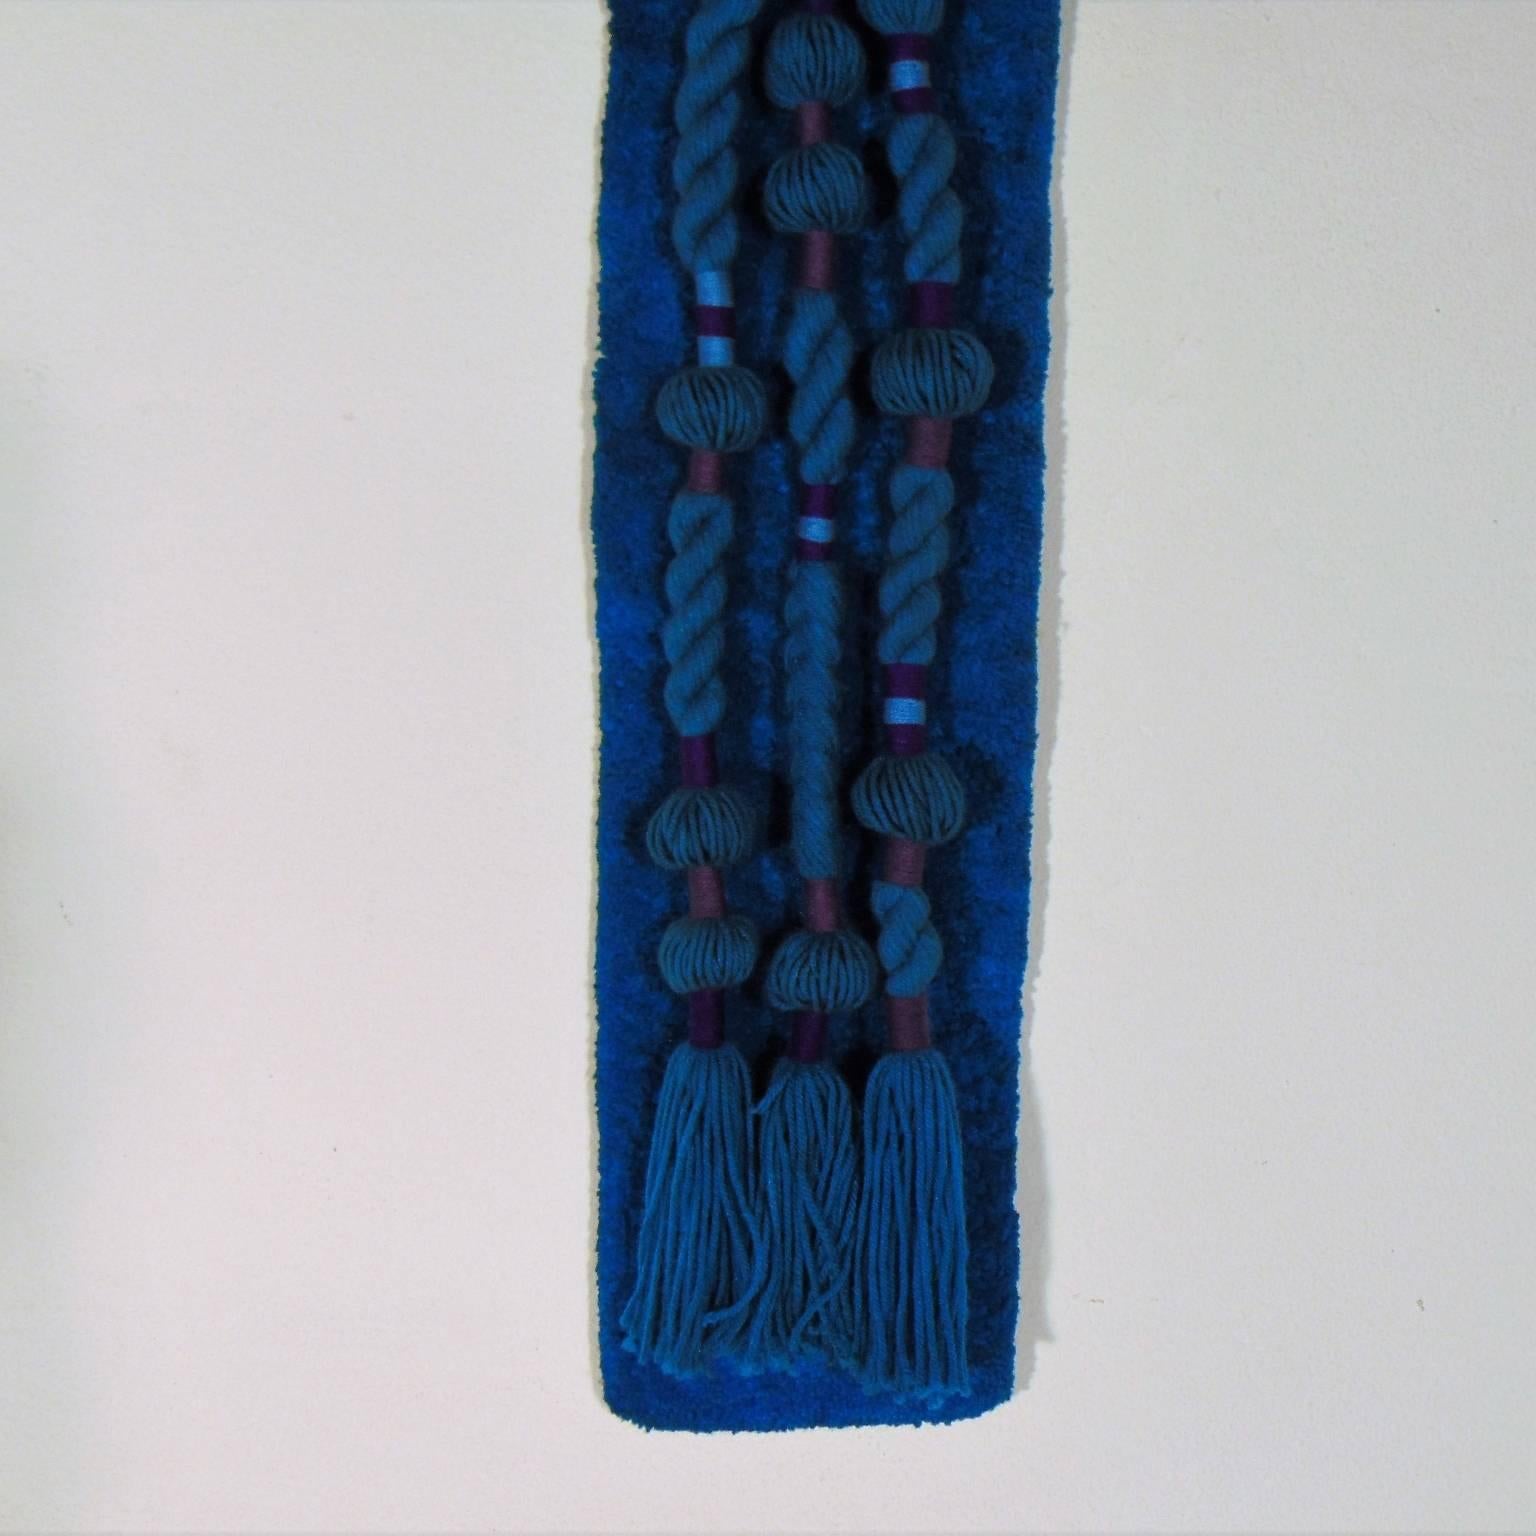 Hand-Woven Ewald Kroener Wall Tapestry Blue Wool, Handwoven, 1970s, Germany